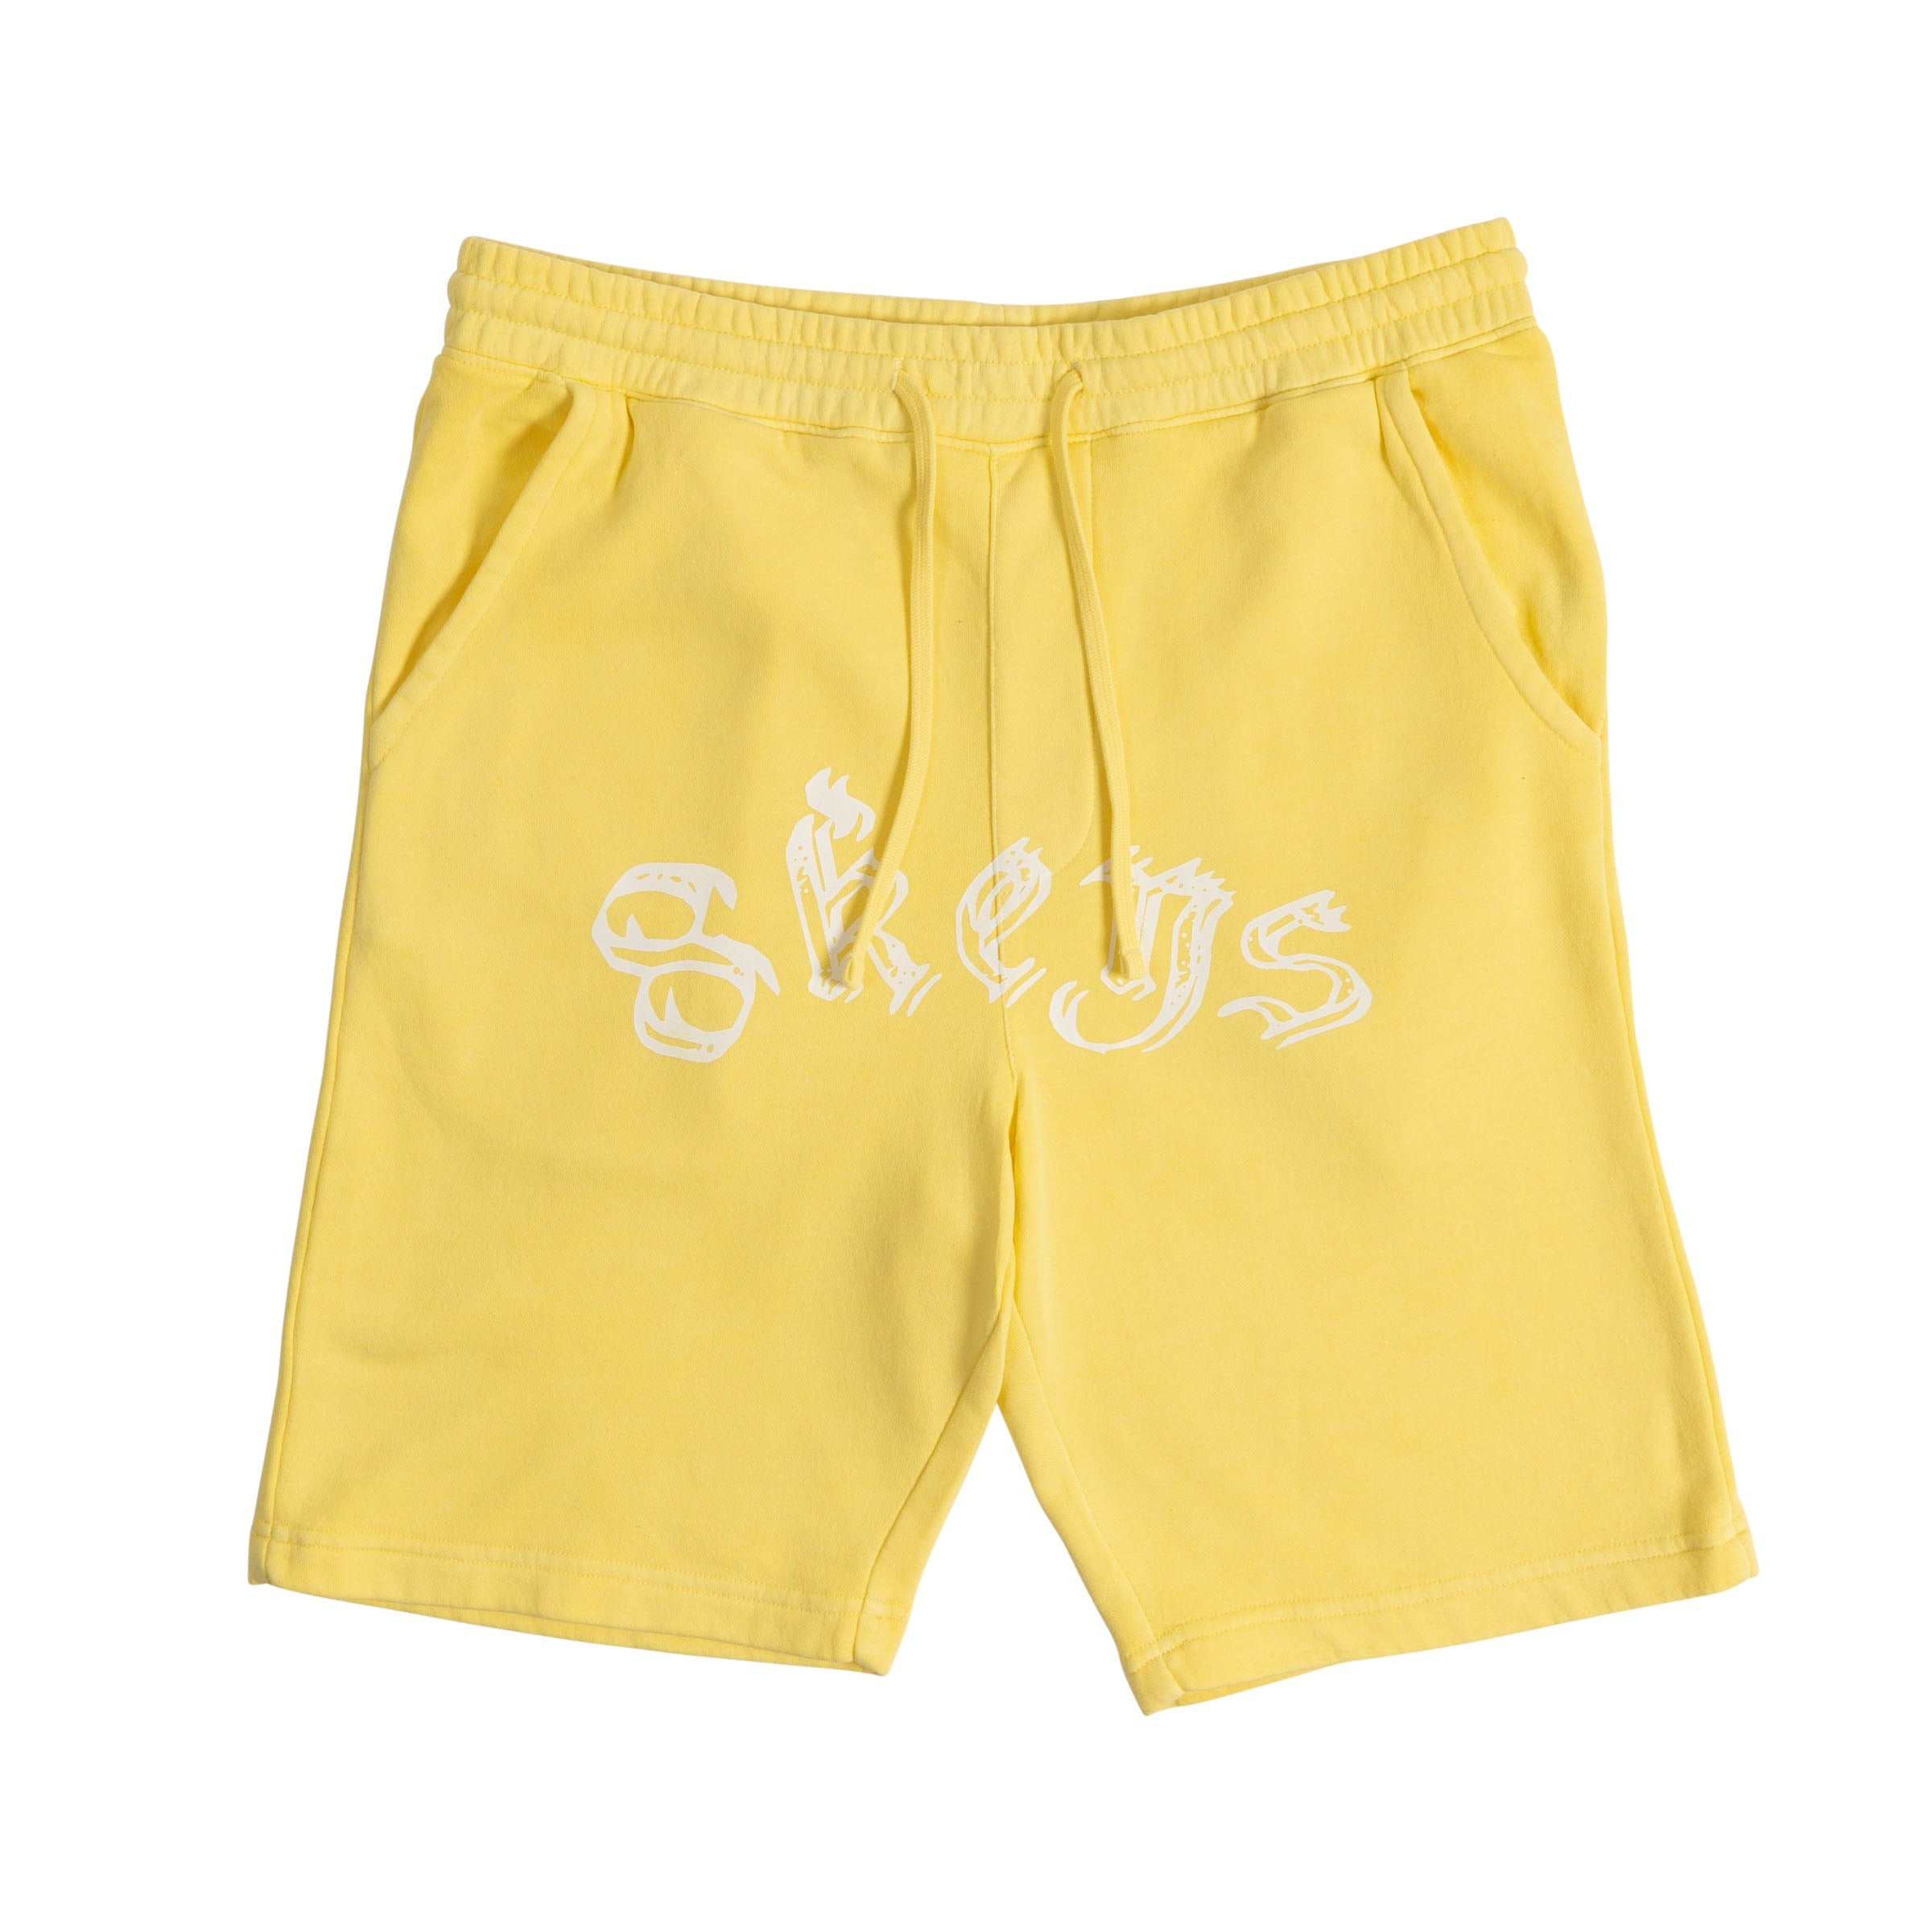 Yellow 8keys shorts